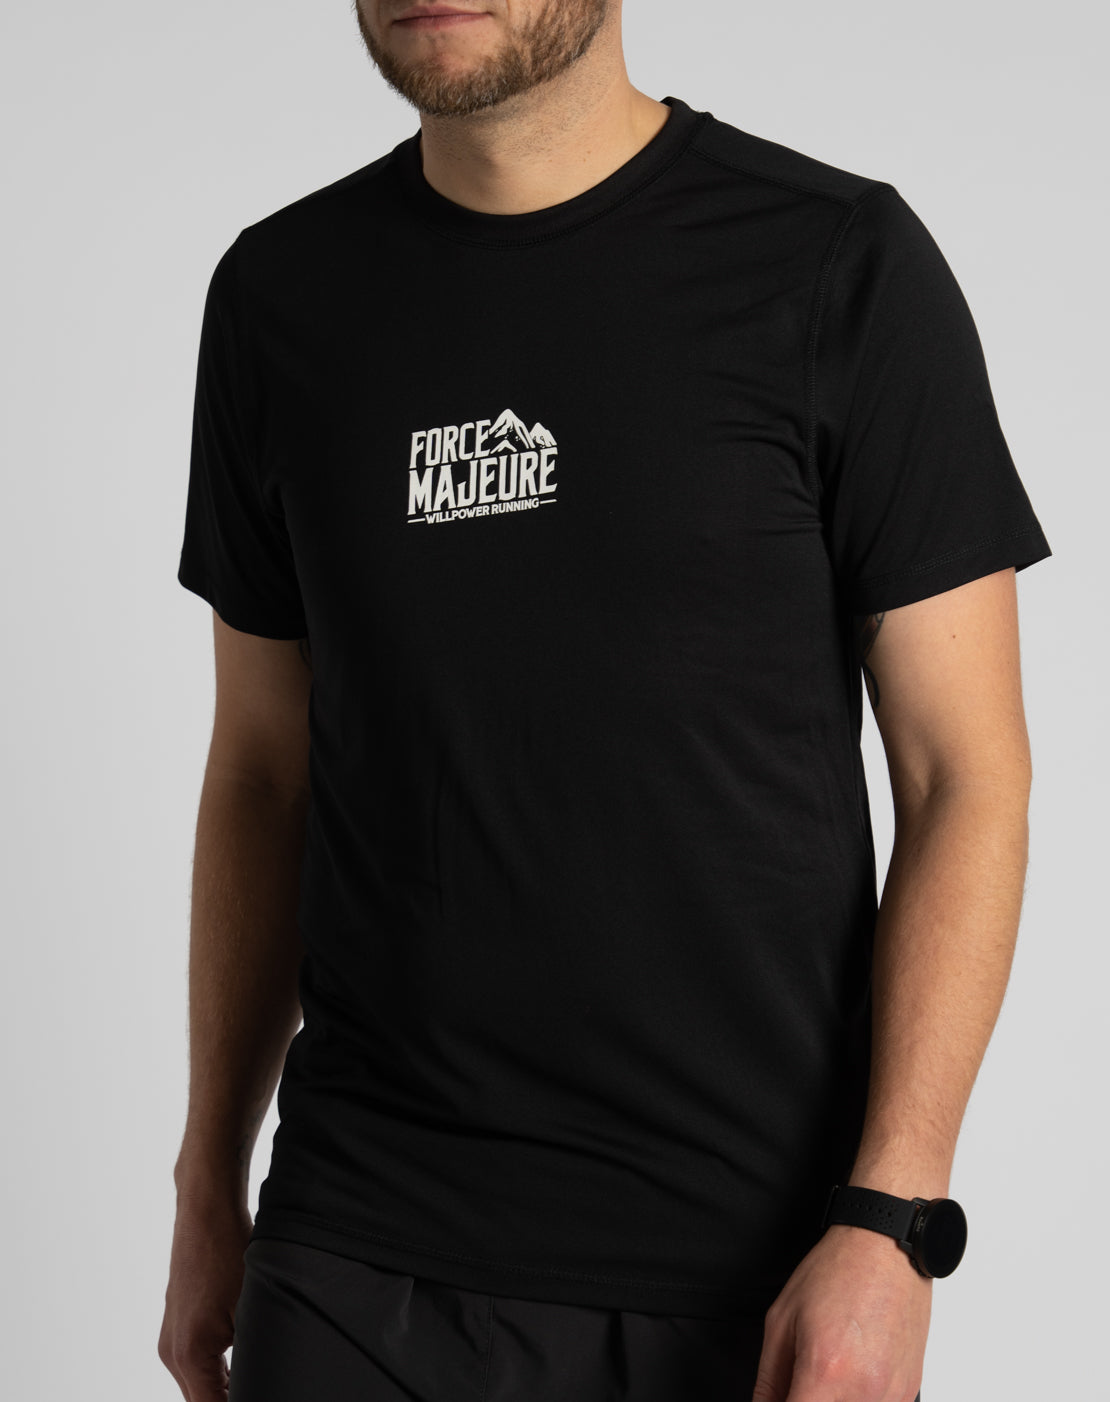 "Force Majeure" Prime Racing T-Shirt